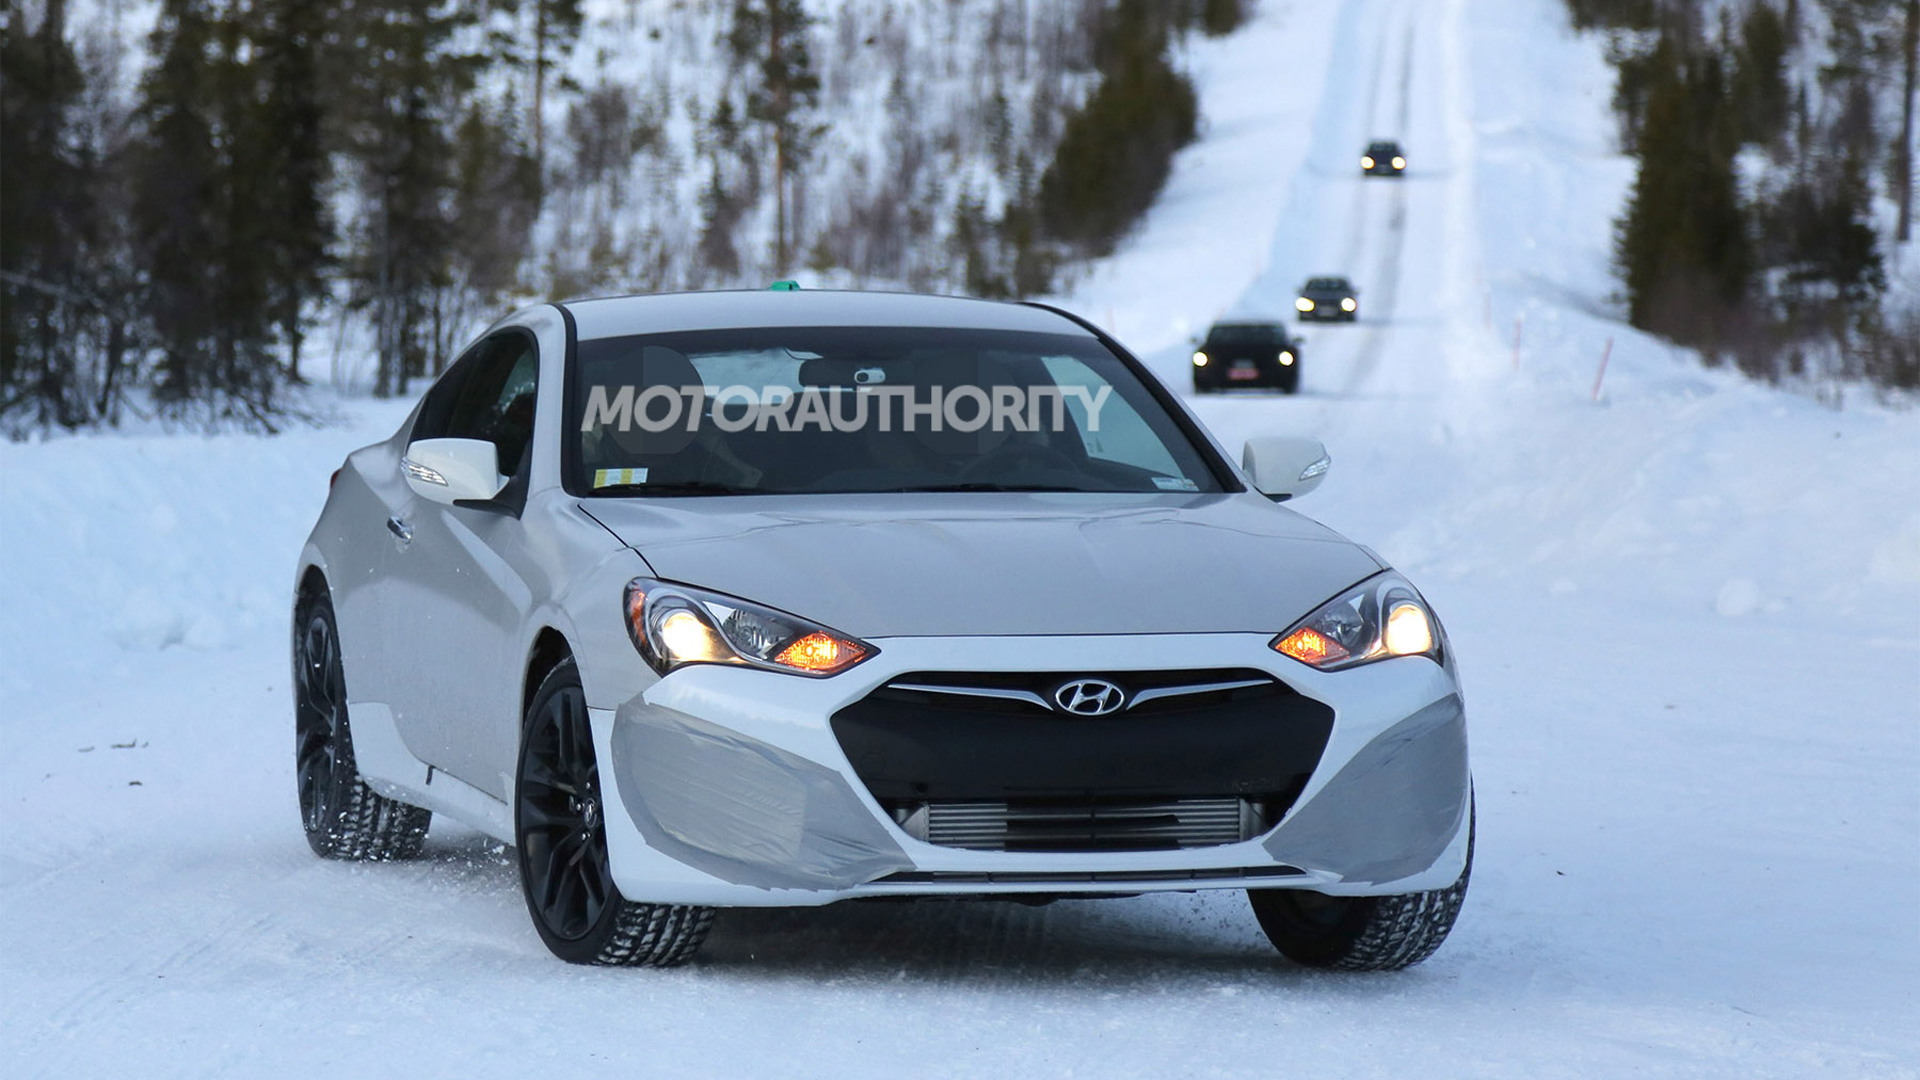 2017 Hyundai Genesis Coupe test mule spy shots - Image via S. Baldauf/SB-Medien